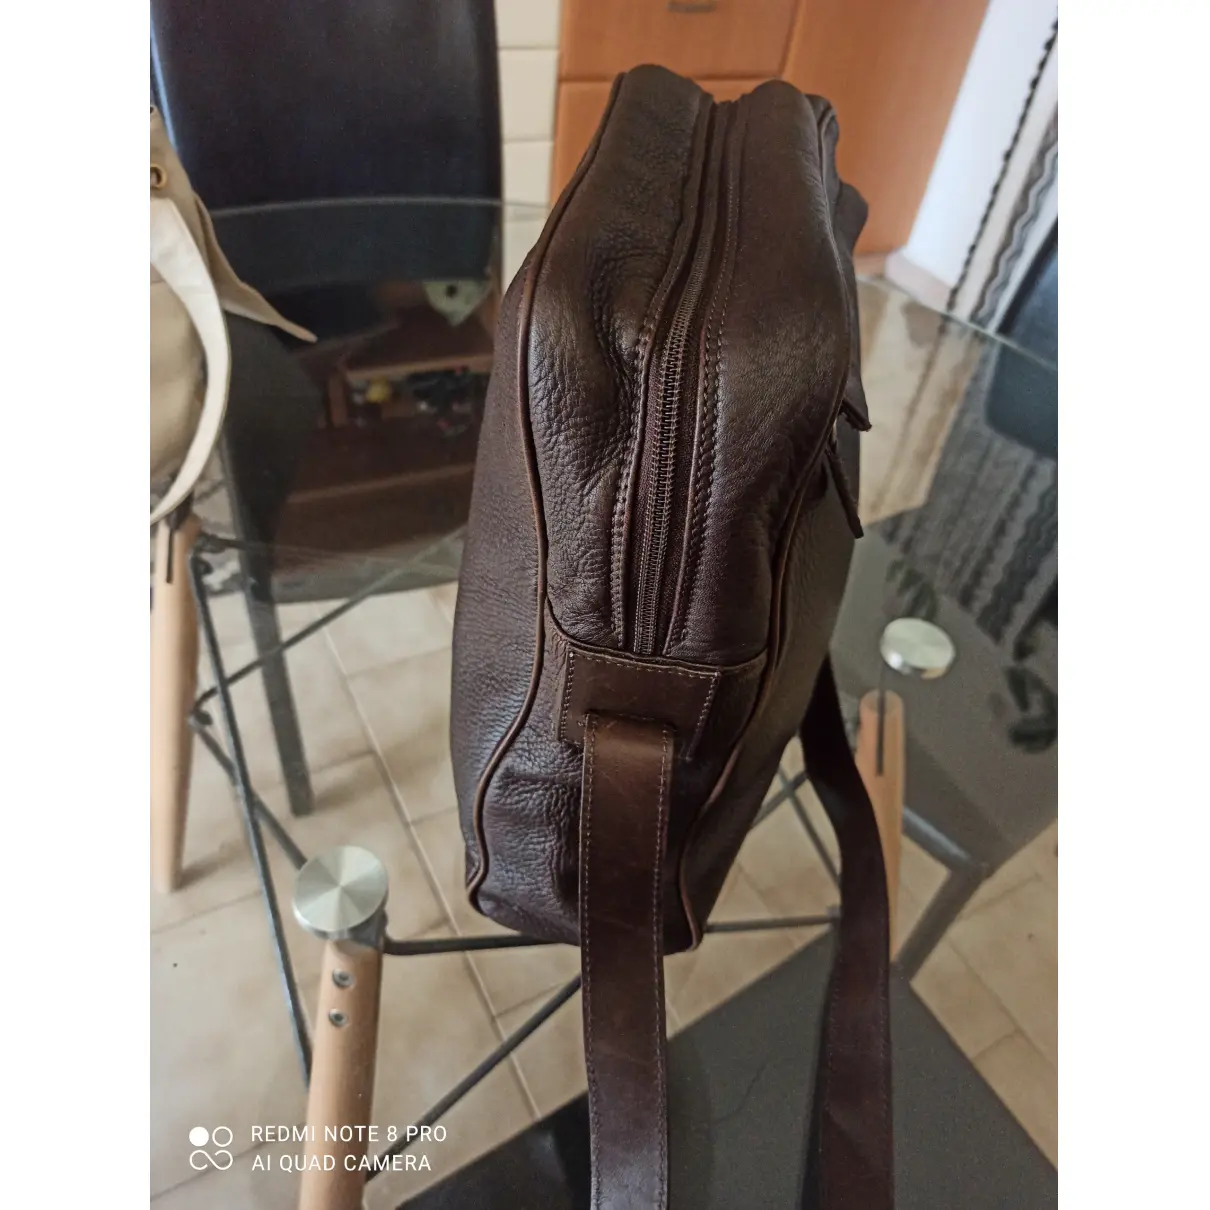 Buy Giorgio Armani Leather bag online